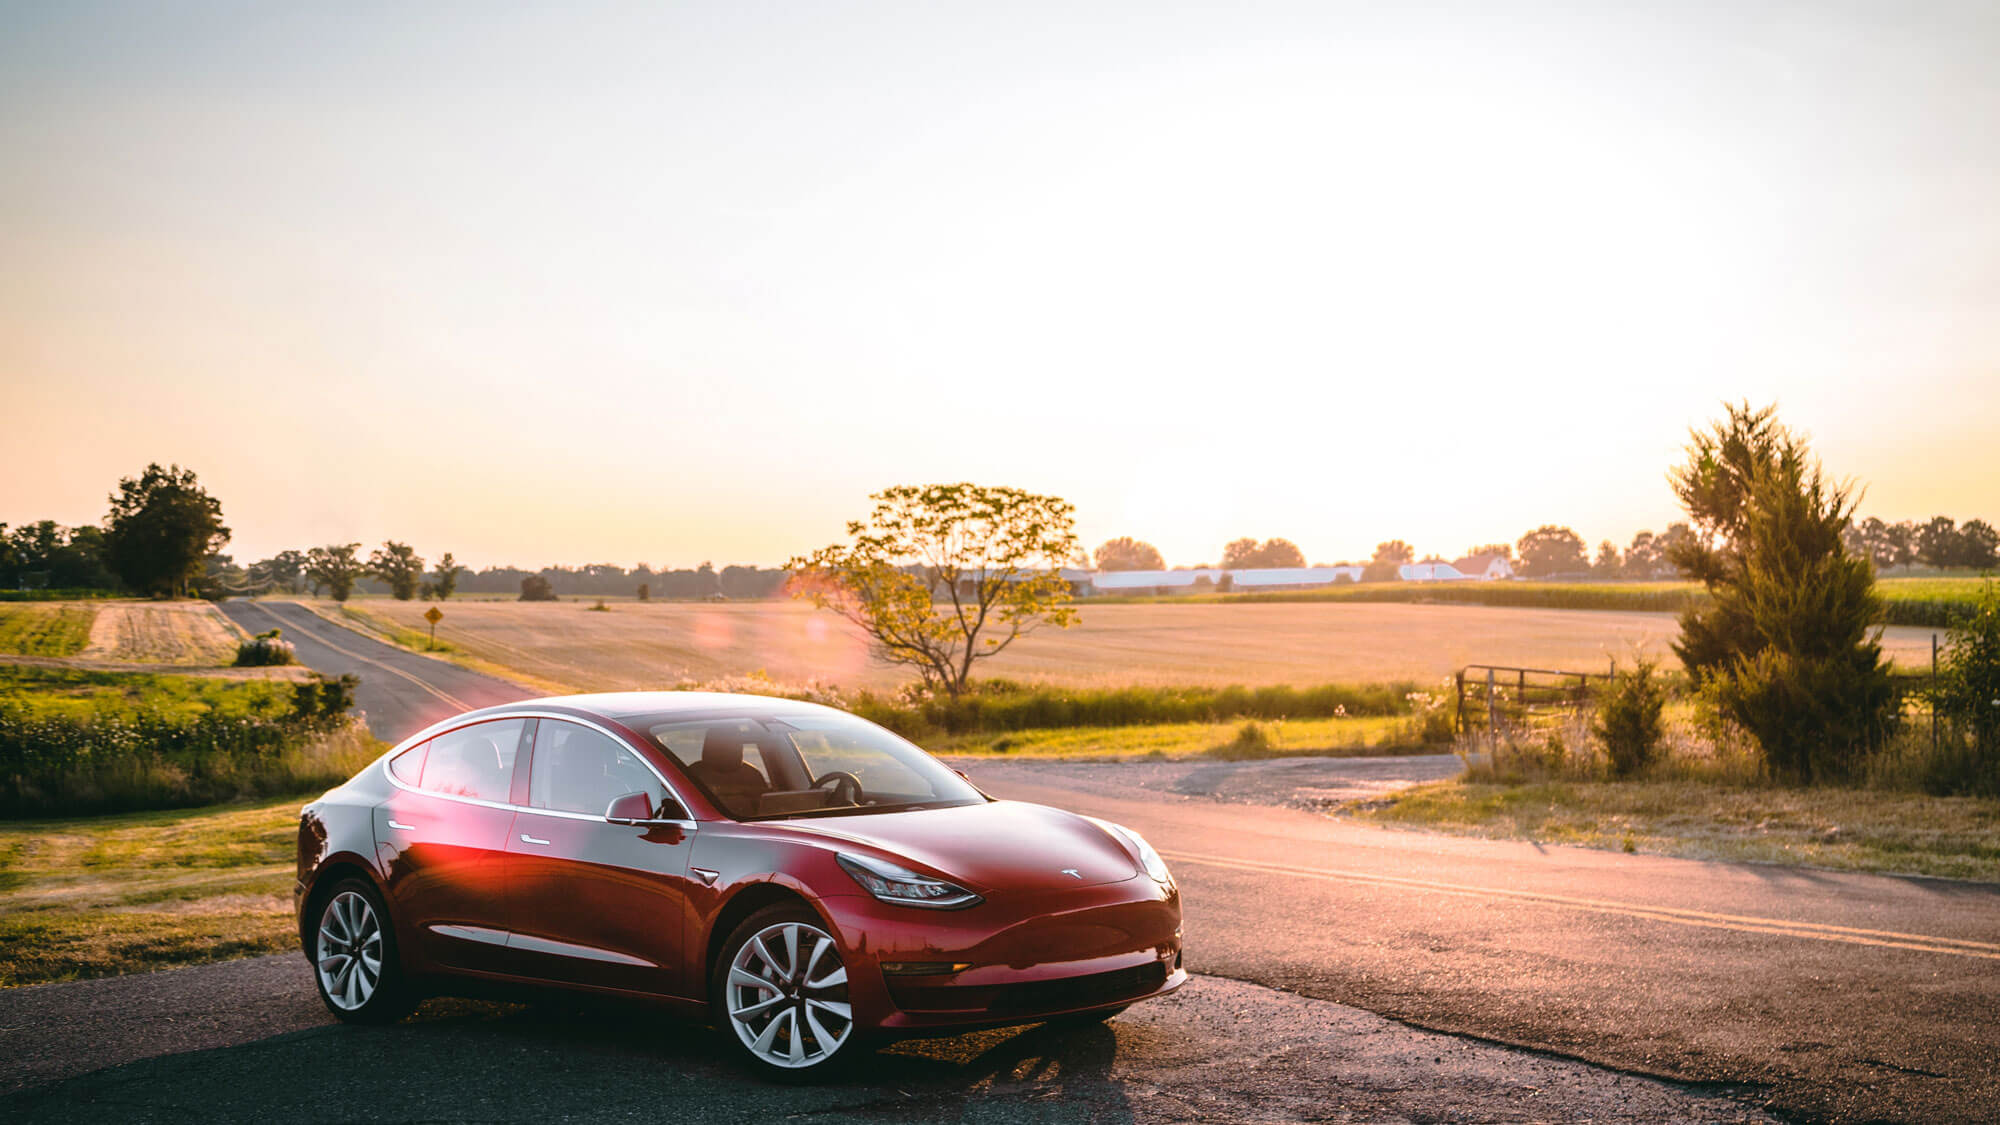 Electric vehicle by Tesla